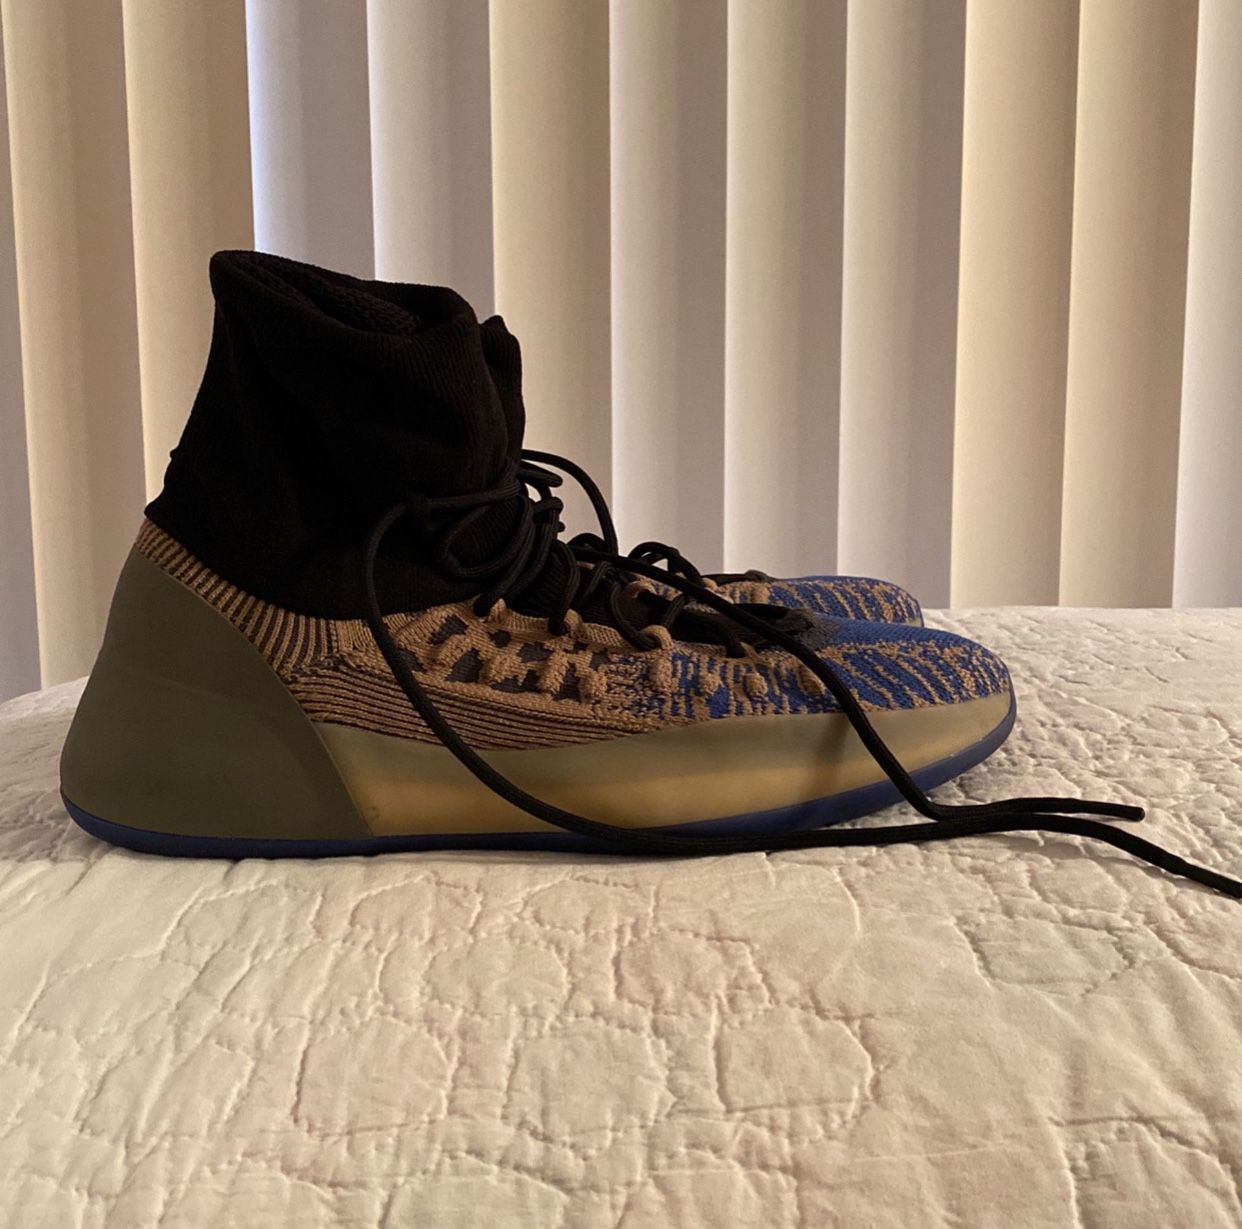 Adidas Yeezy Basketball Knit “Slate Azure” Size 13.5